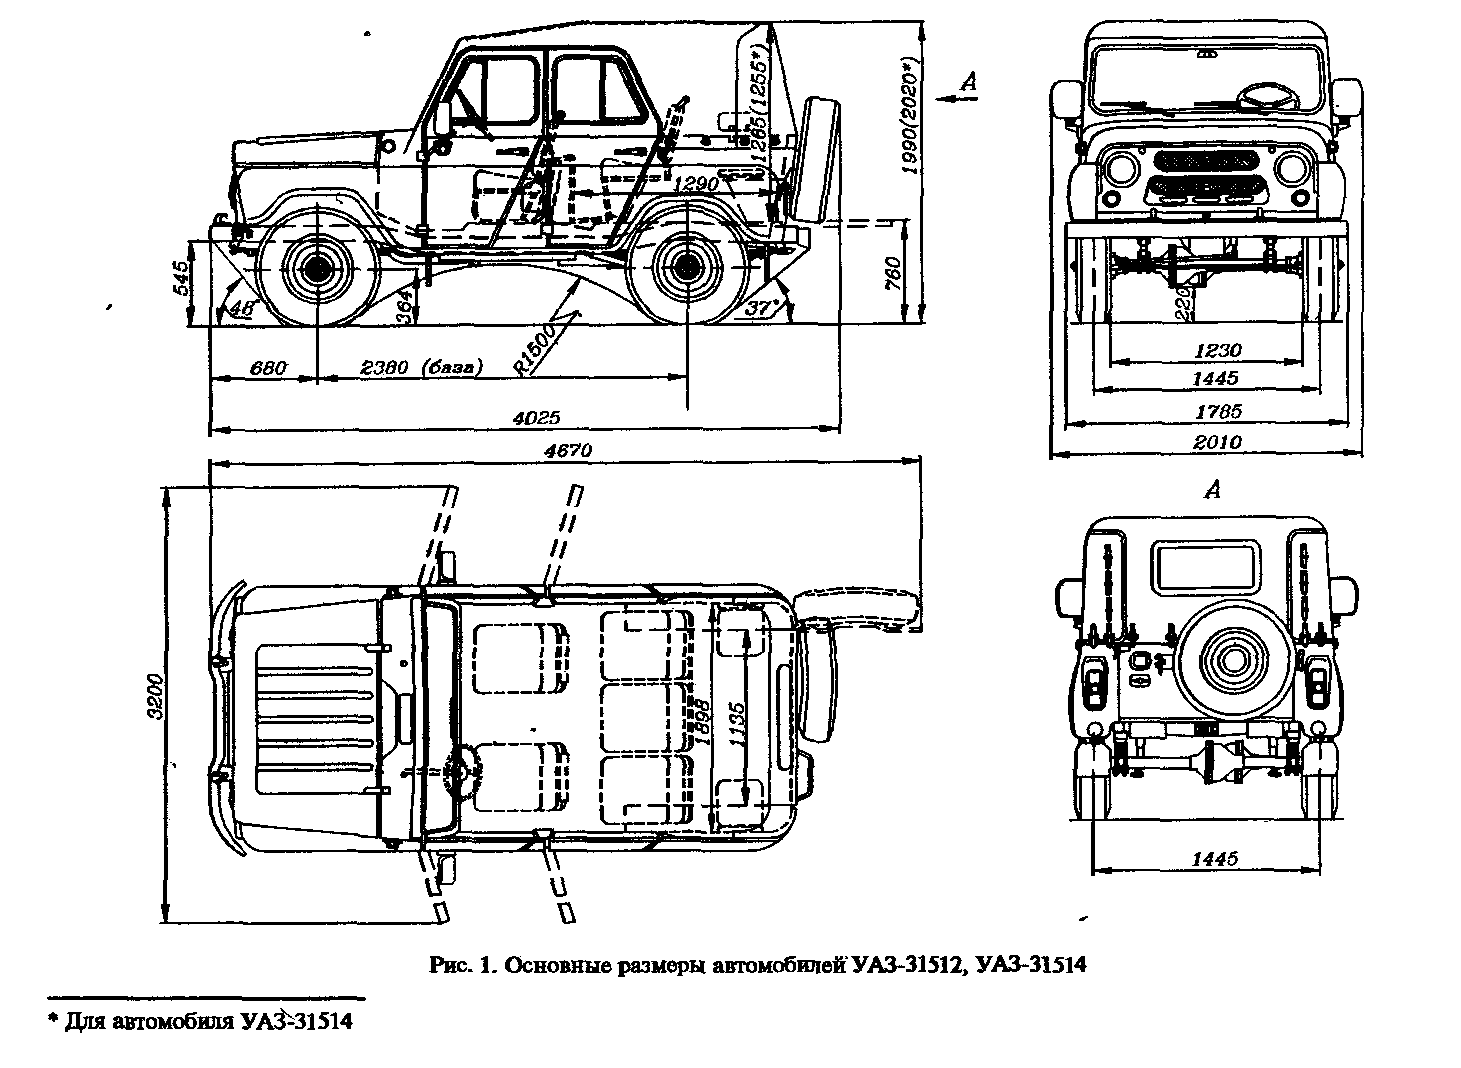 Уаз-31512: технические характеристики, история модели